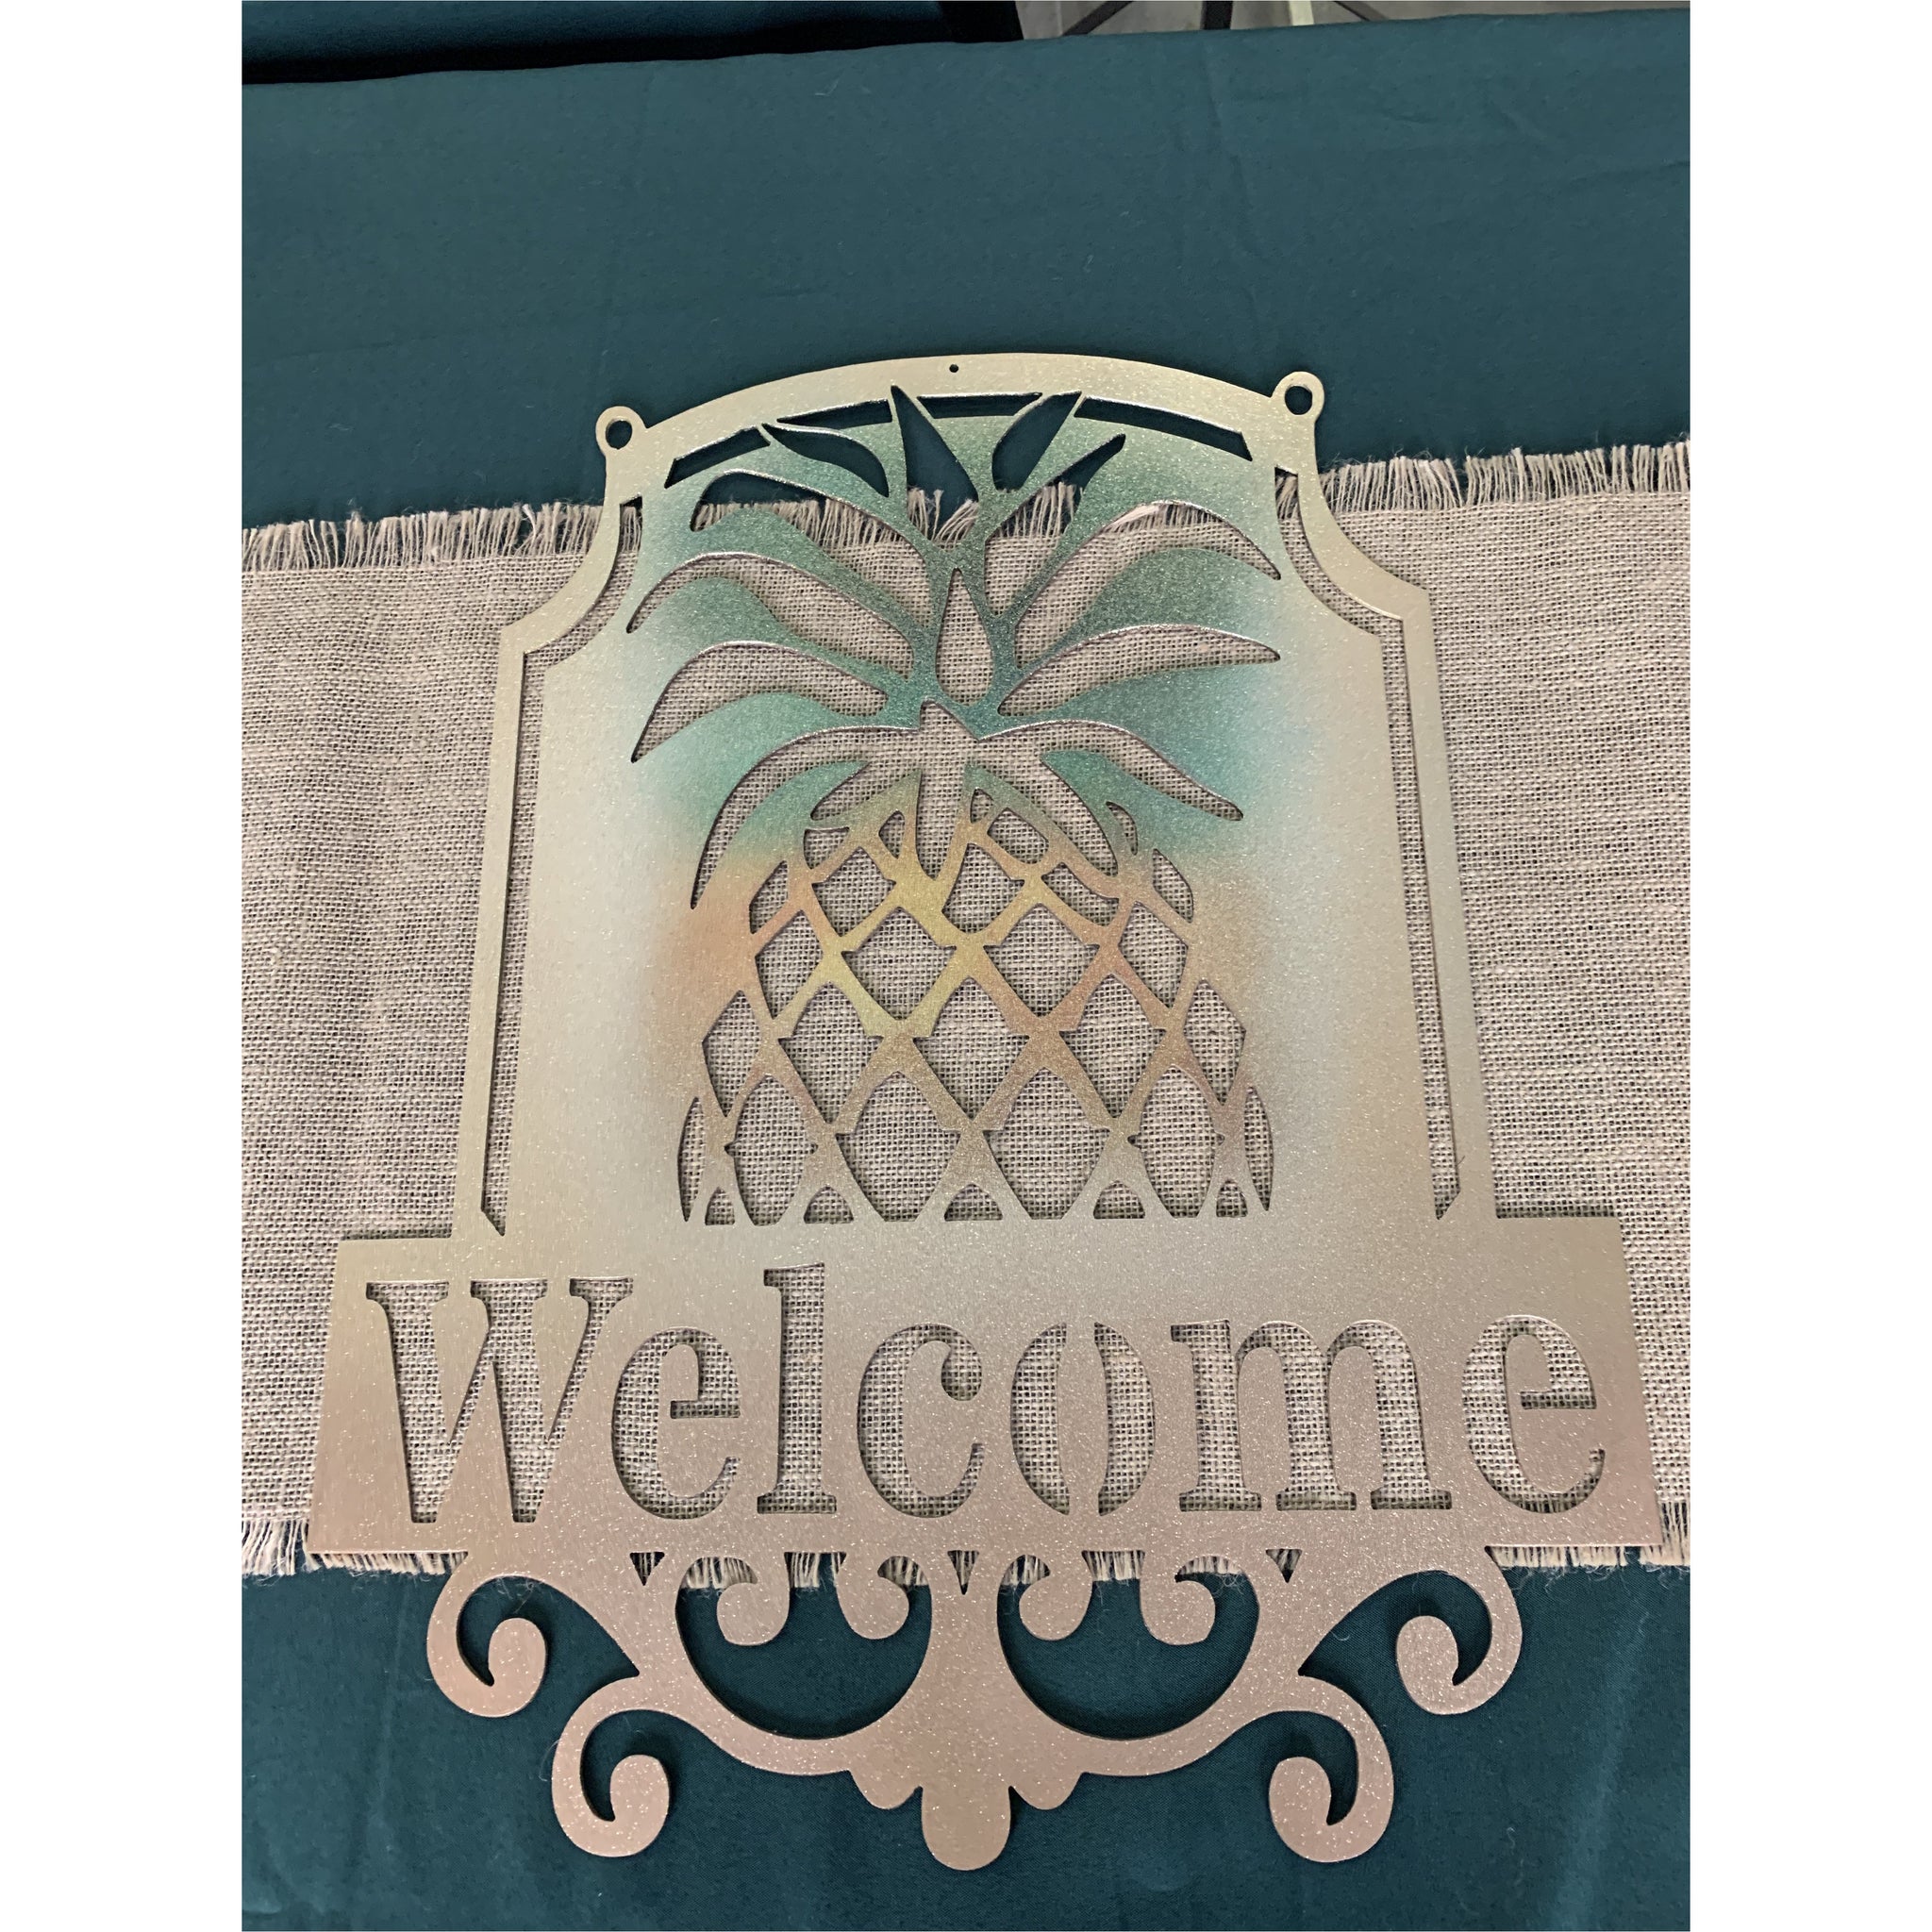 Welcome Pineapple